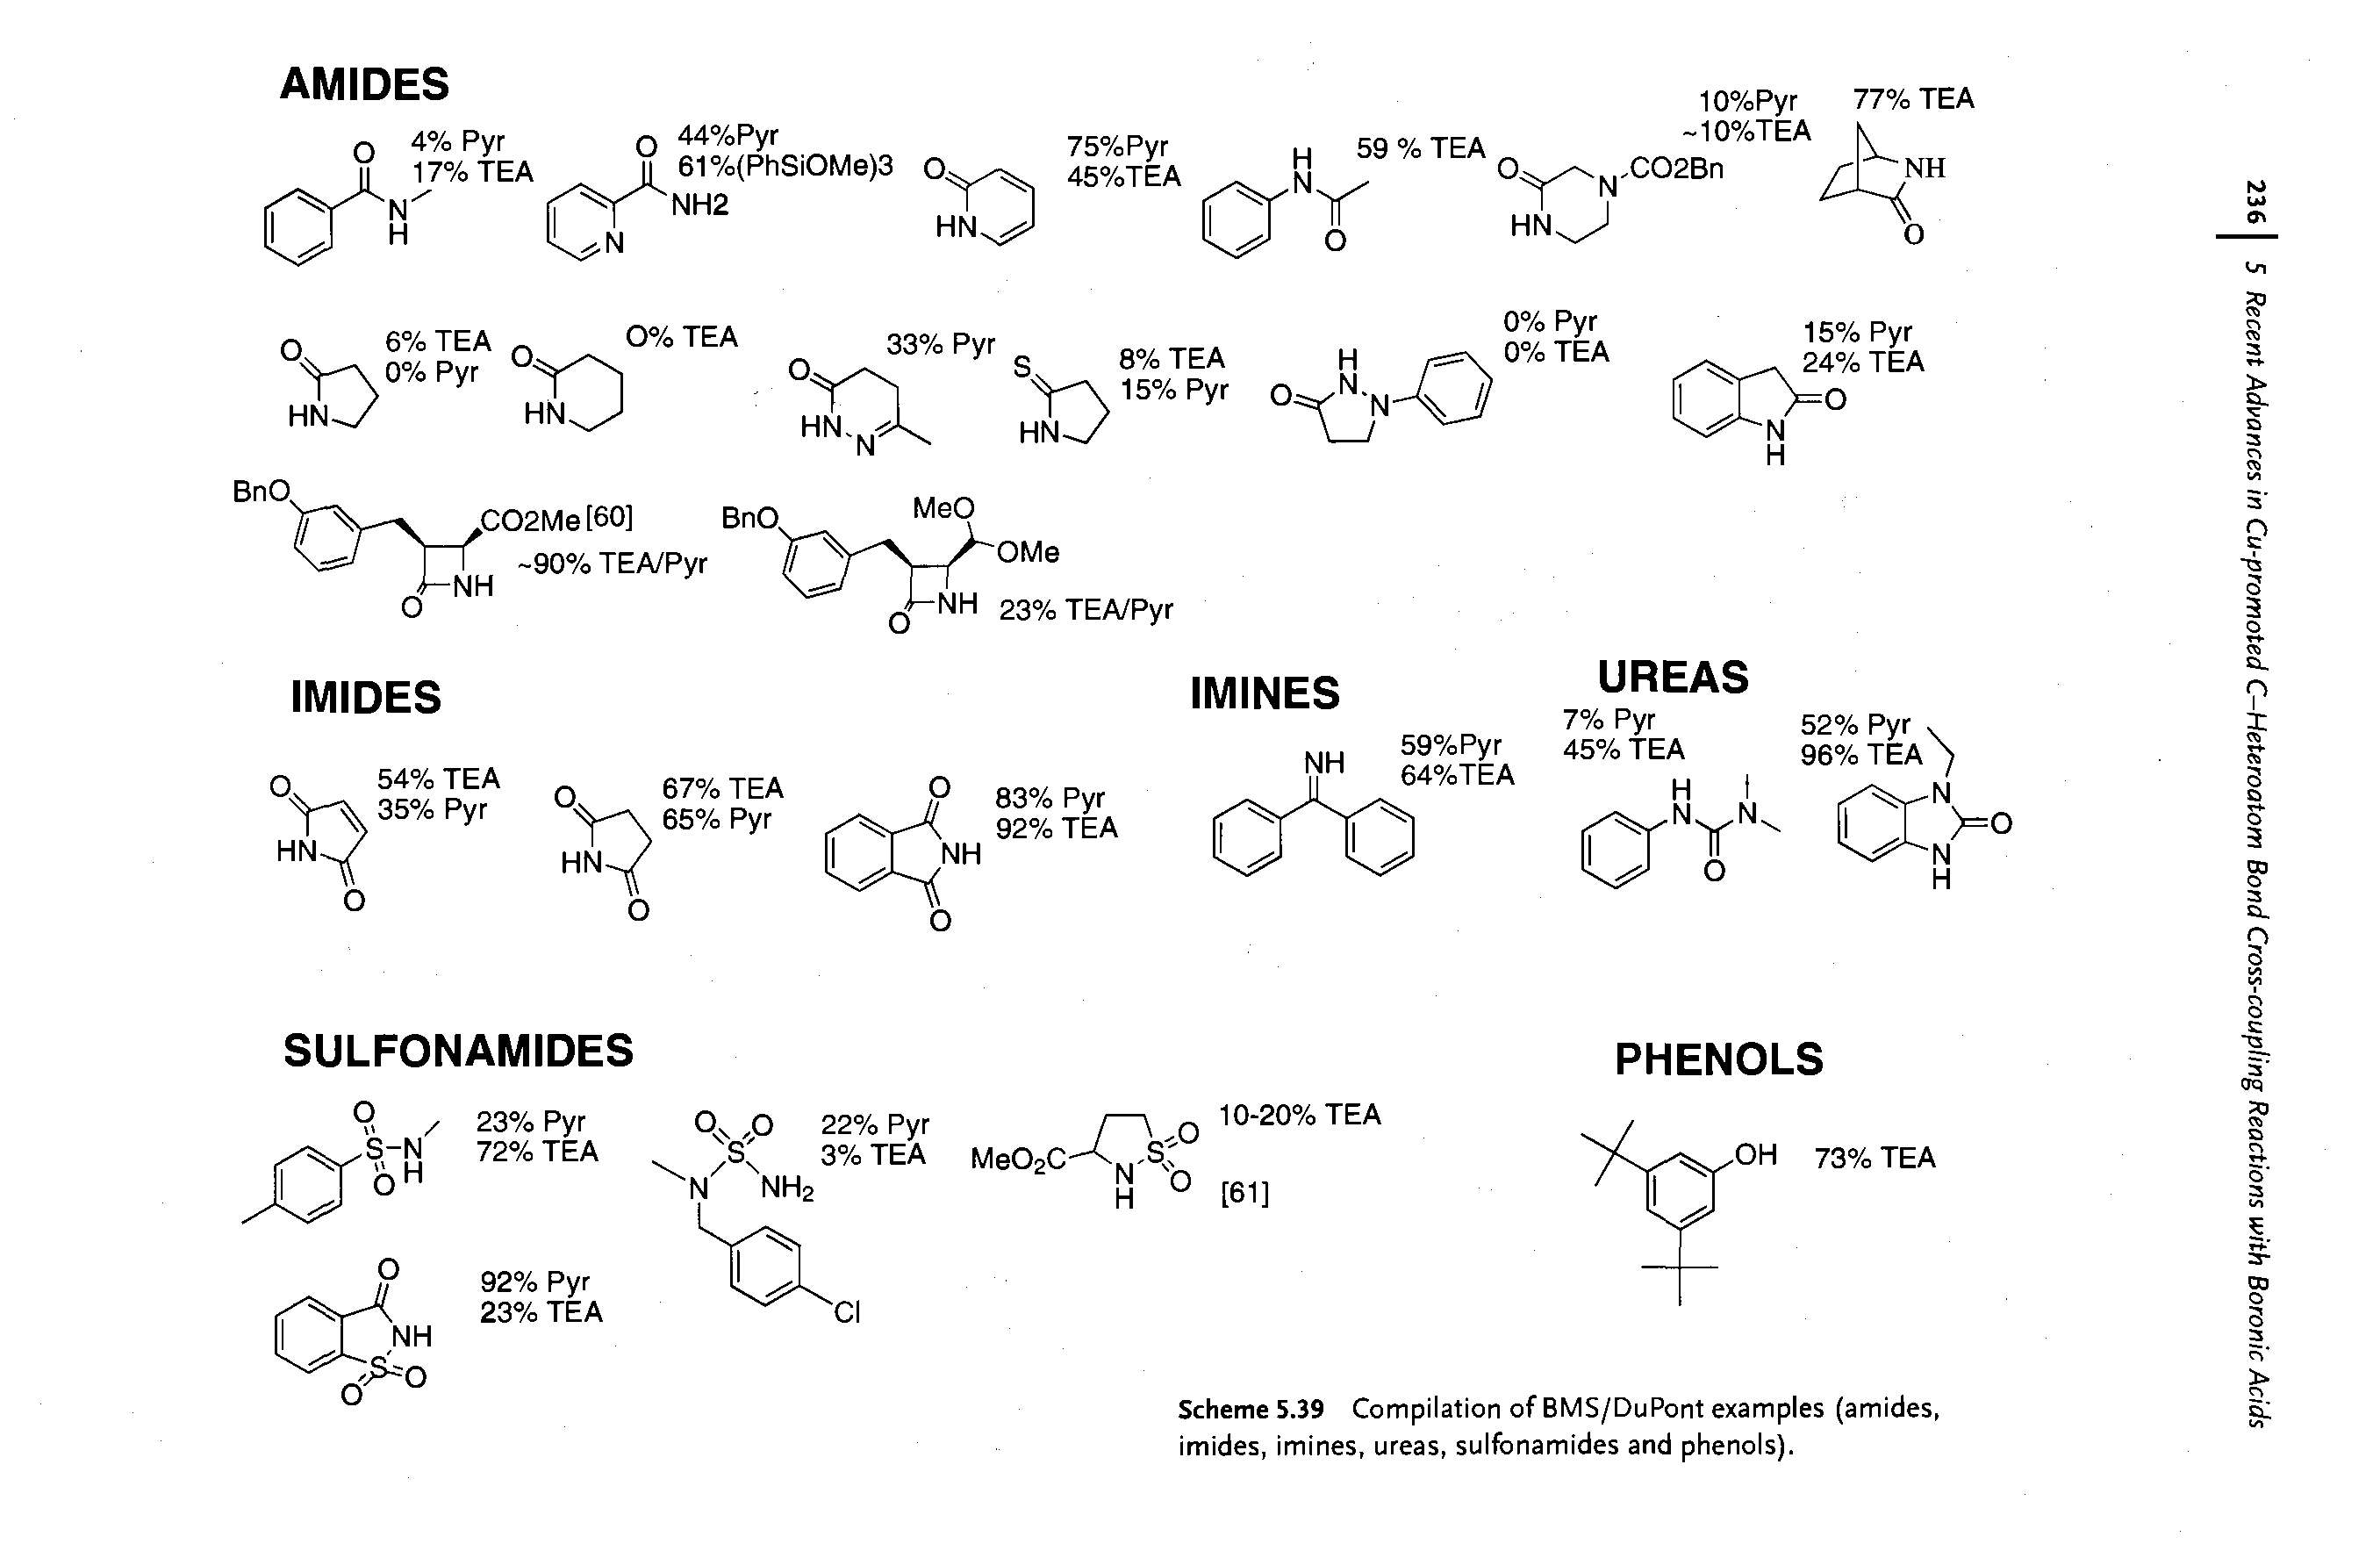 Scheme 5.39 Compilation of BMS/DuPont examples (amides, imides, imines, ureas, sulfonamides and phenols).